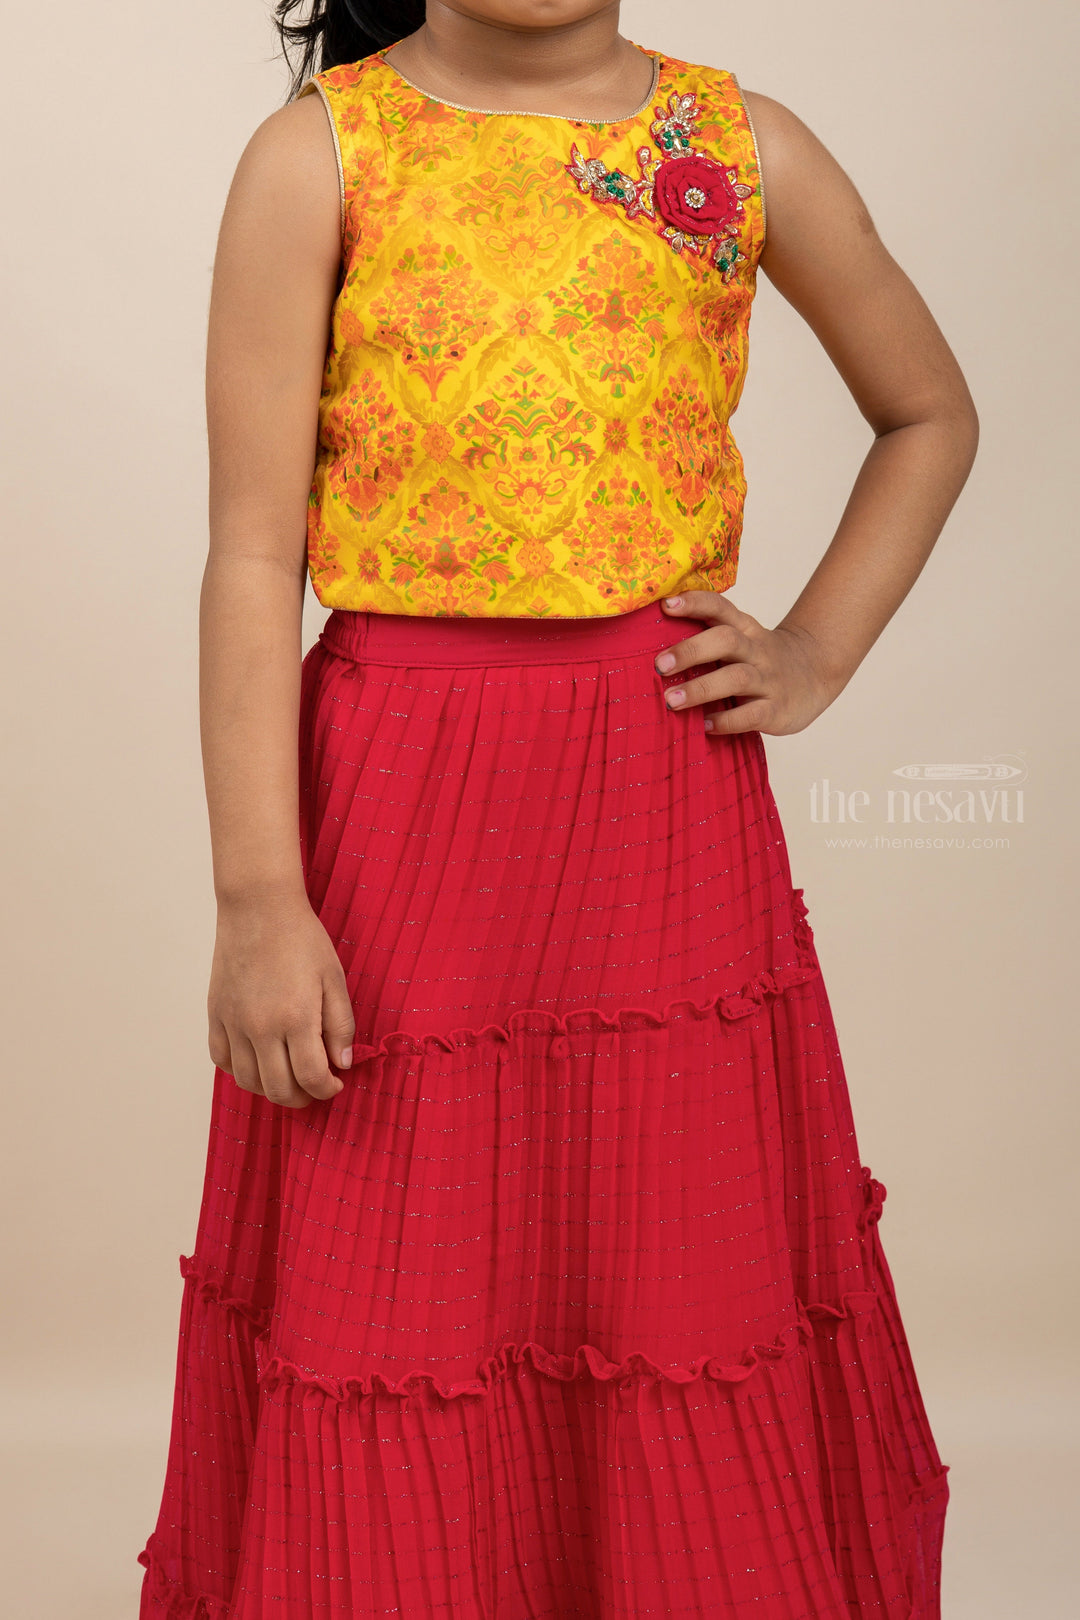 The Nesavu Lehenga & Ghagra Cool Dress Code - Magical Yellow Crop Top With Multi-tiered Crimson Lehenga For Girls psr silks Nesavu